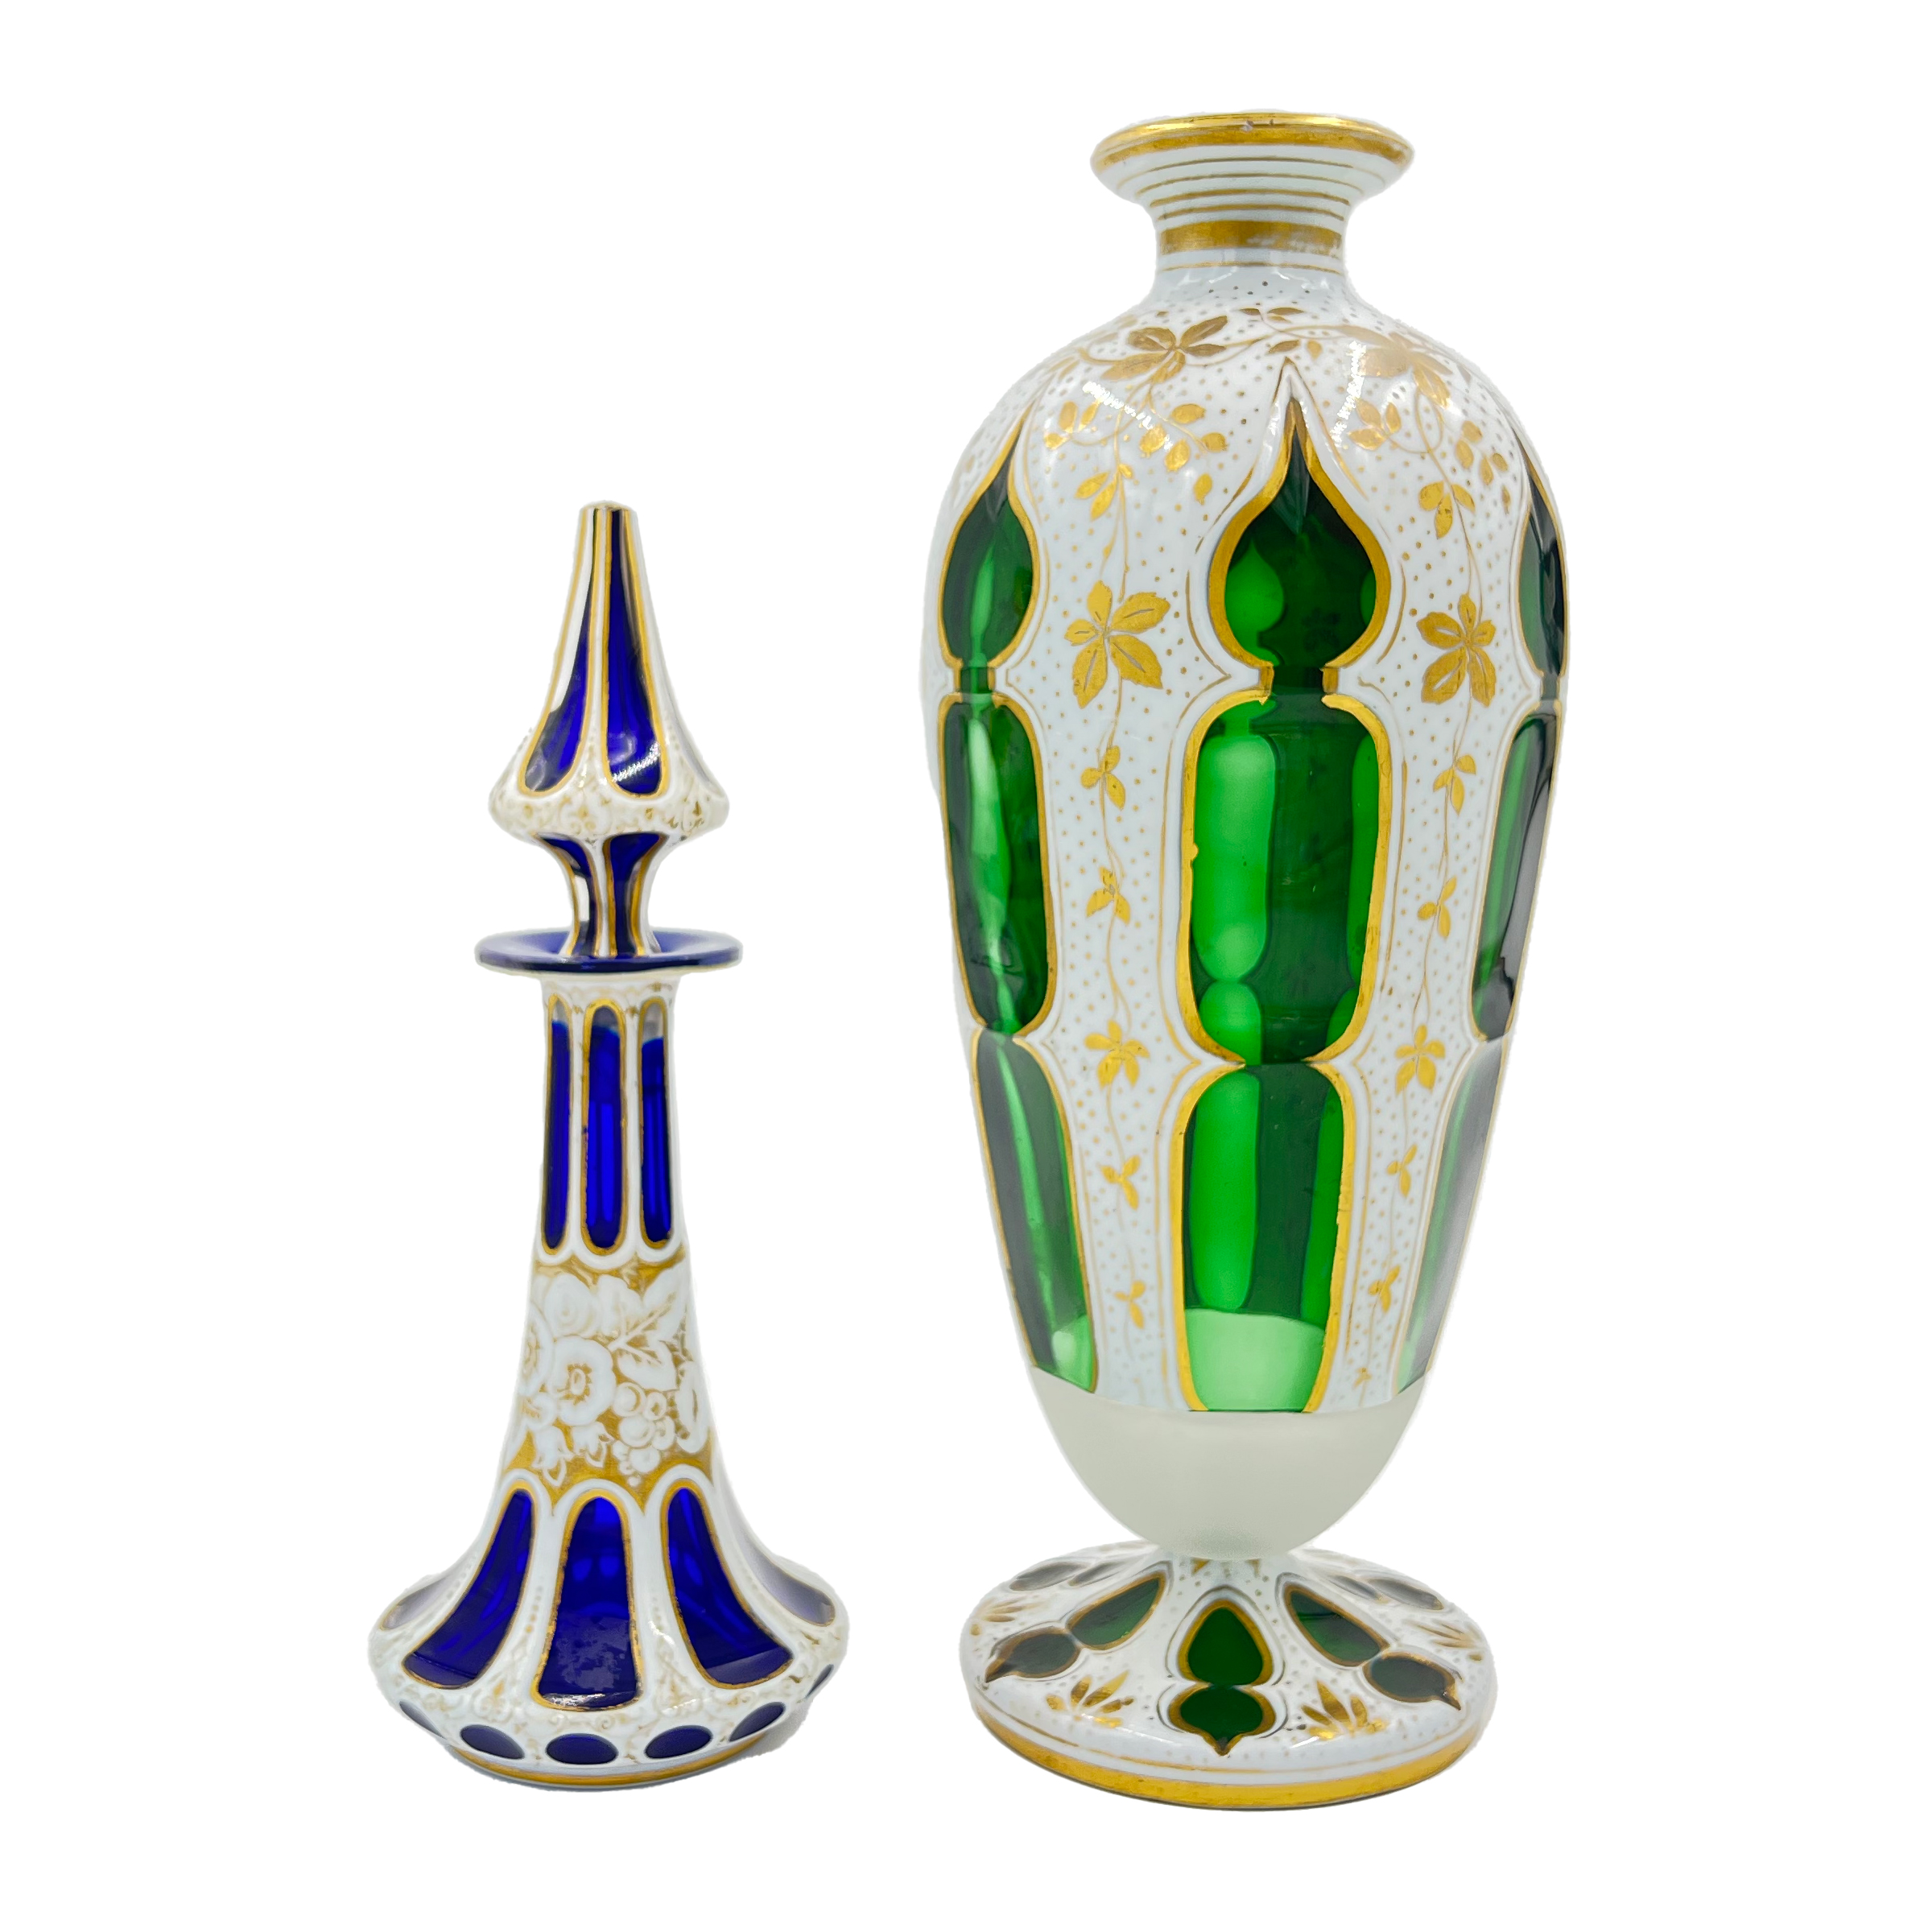 OVERLAY BOHEMIAN GLASS VASE AND PERFUME BOTTLE, 19TH CENTURY